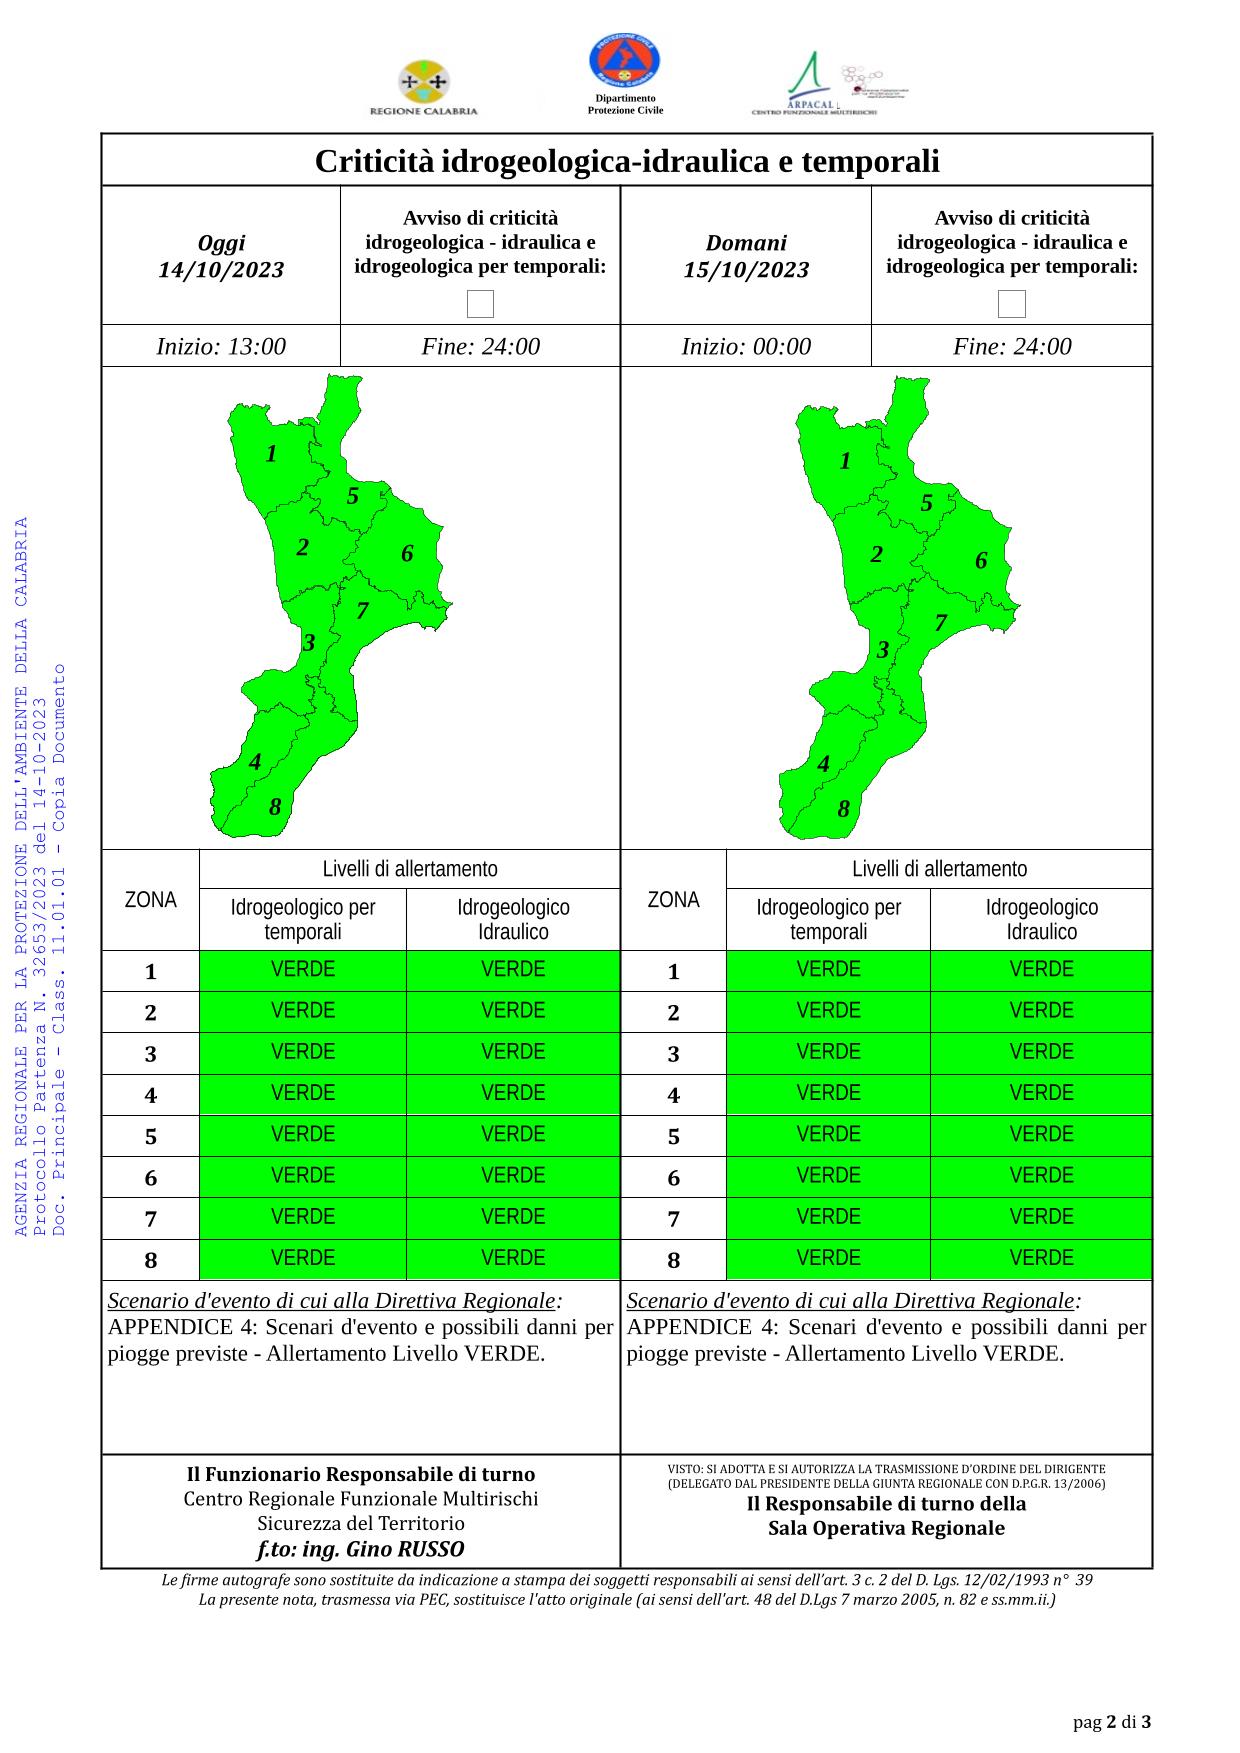 Criticità idrogeologica-idraulica e temporali in Calabria 14-10-2023